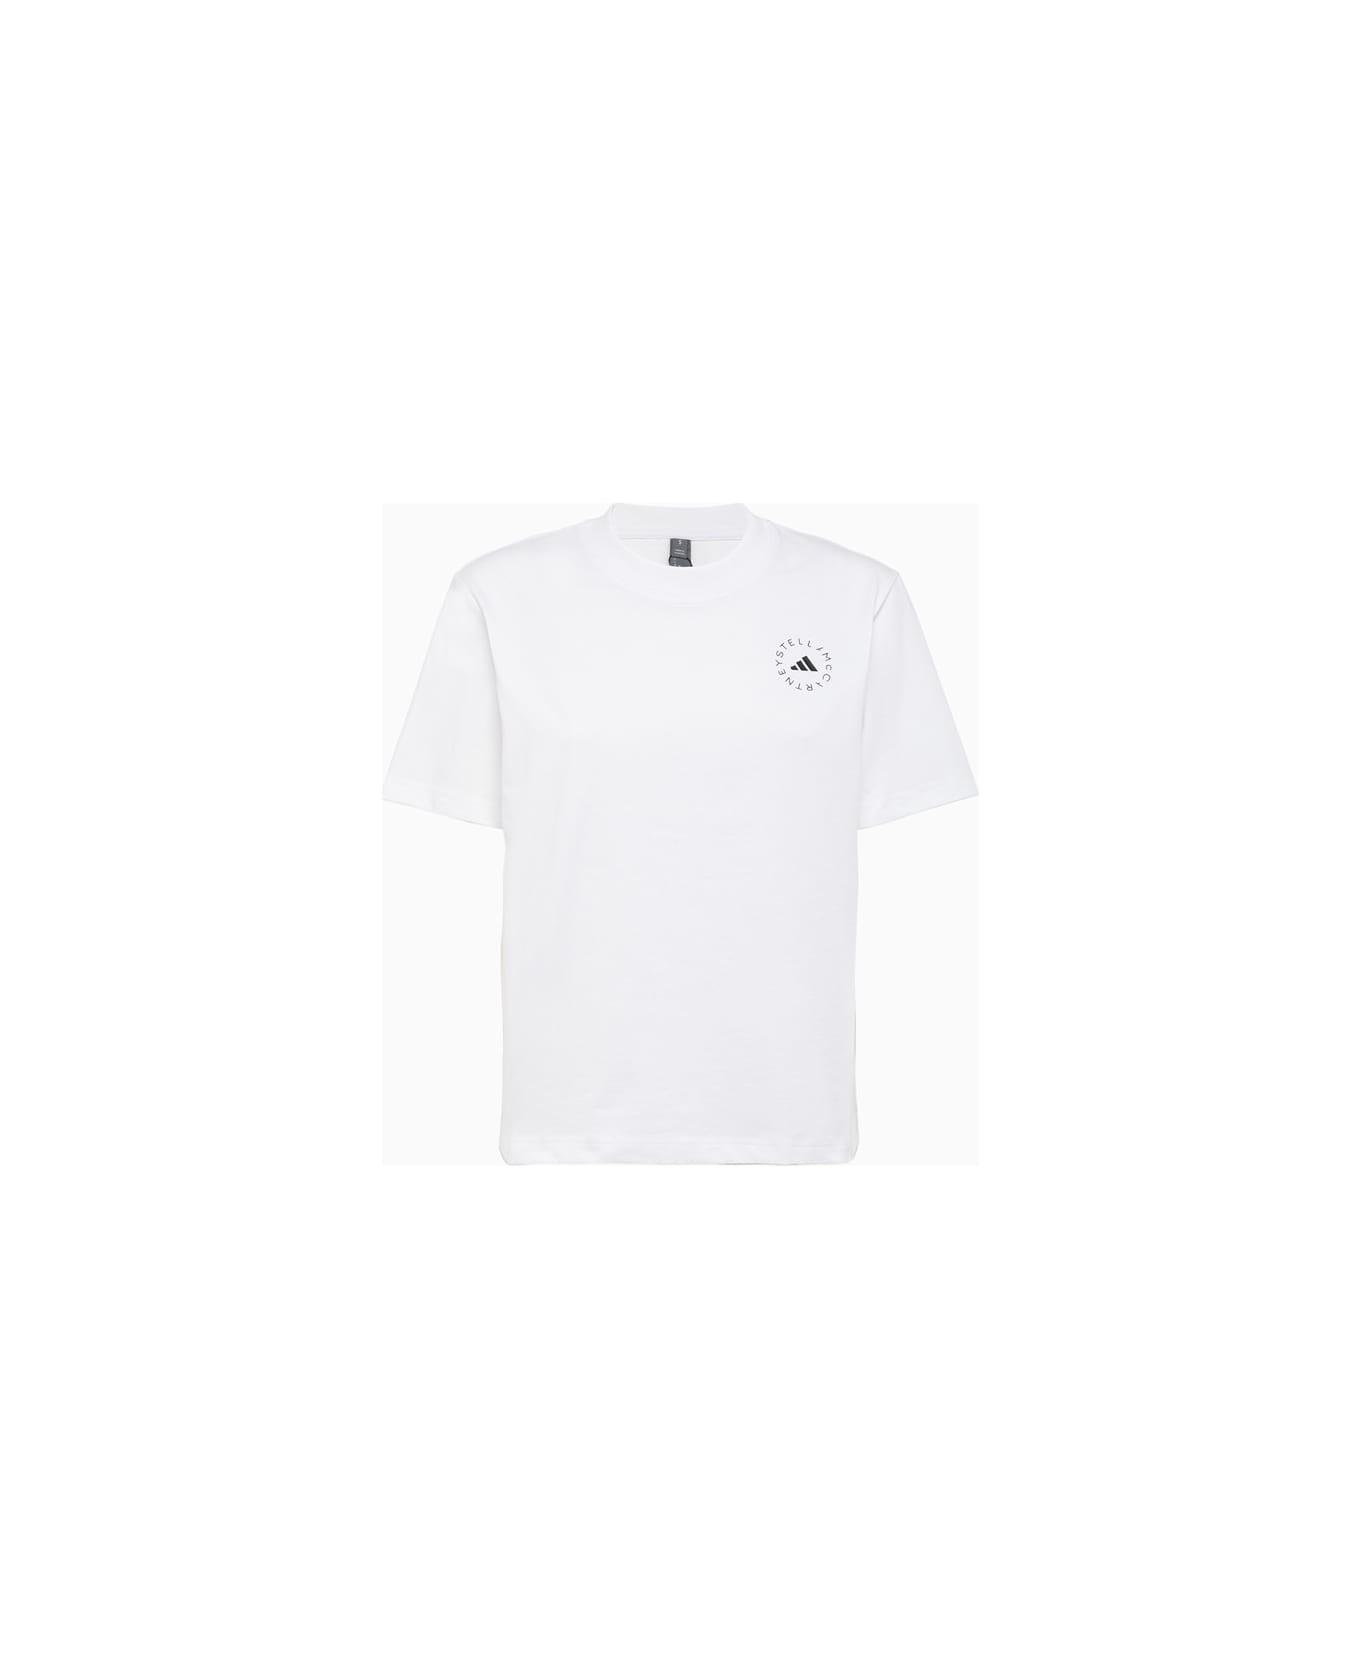 Adidas by Stella McCartney T-shirt Hr9167 - White Tシャツ